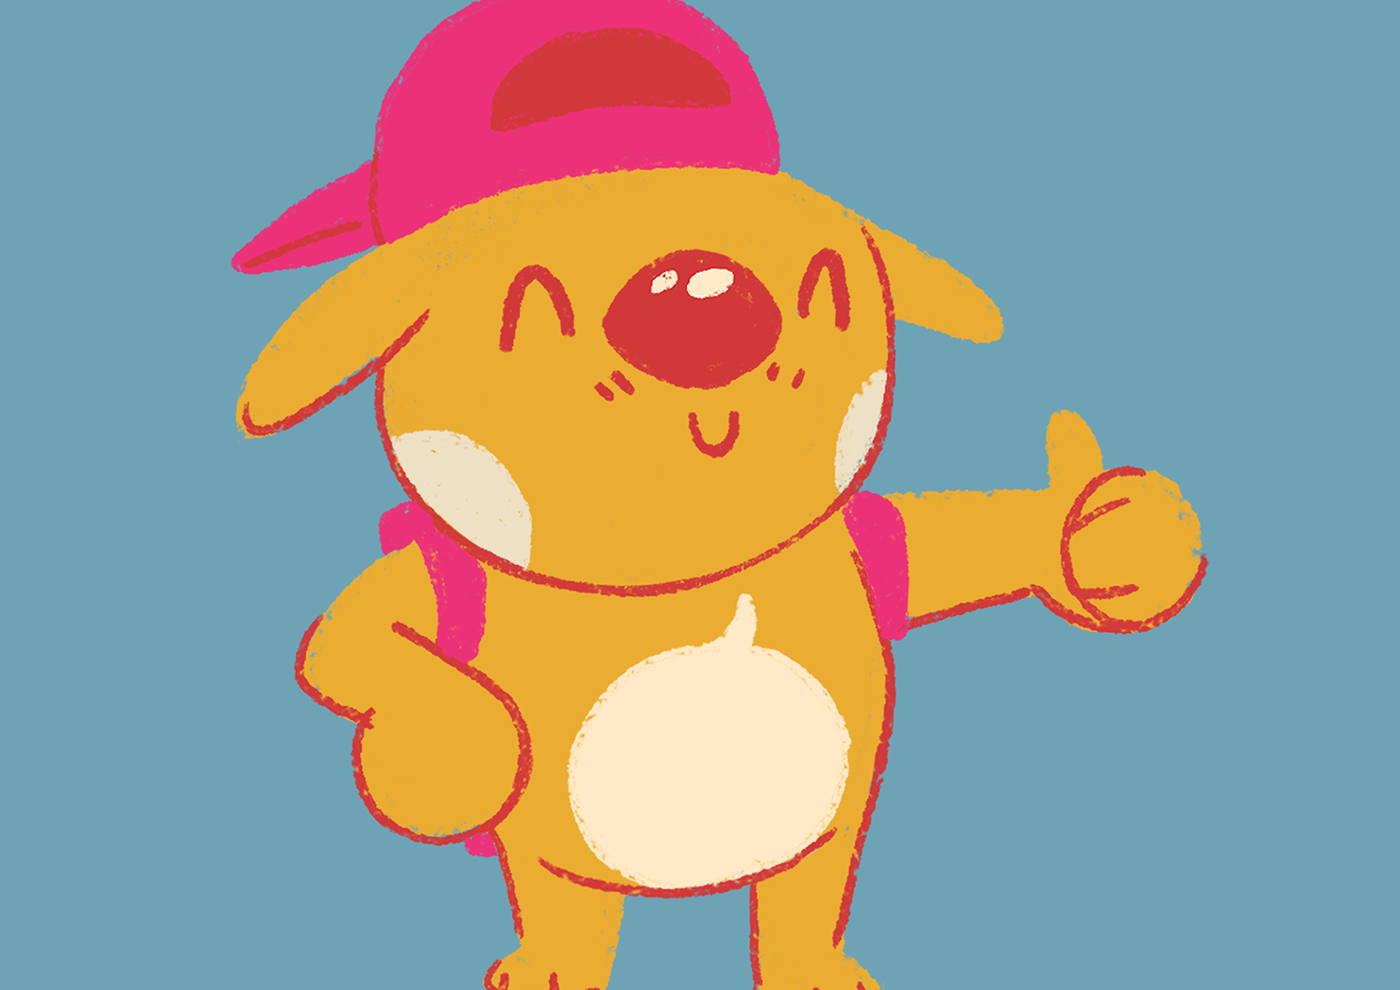 ufpr Character GIZ semana convivencia Mascot cute chalk diga dog